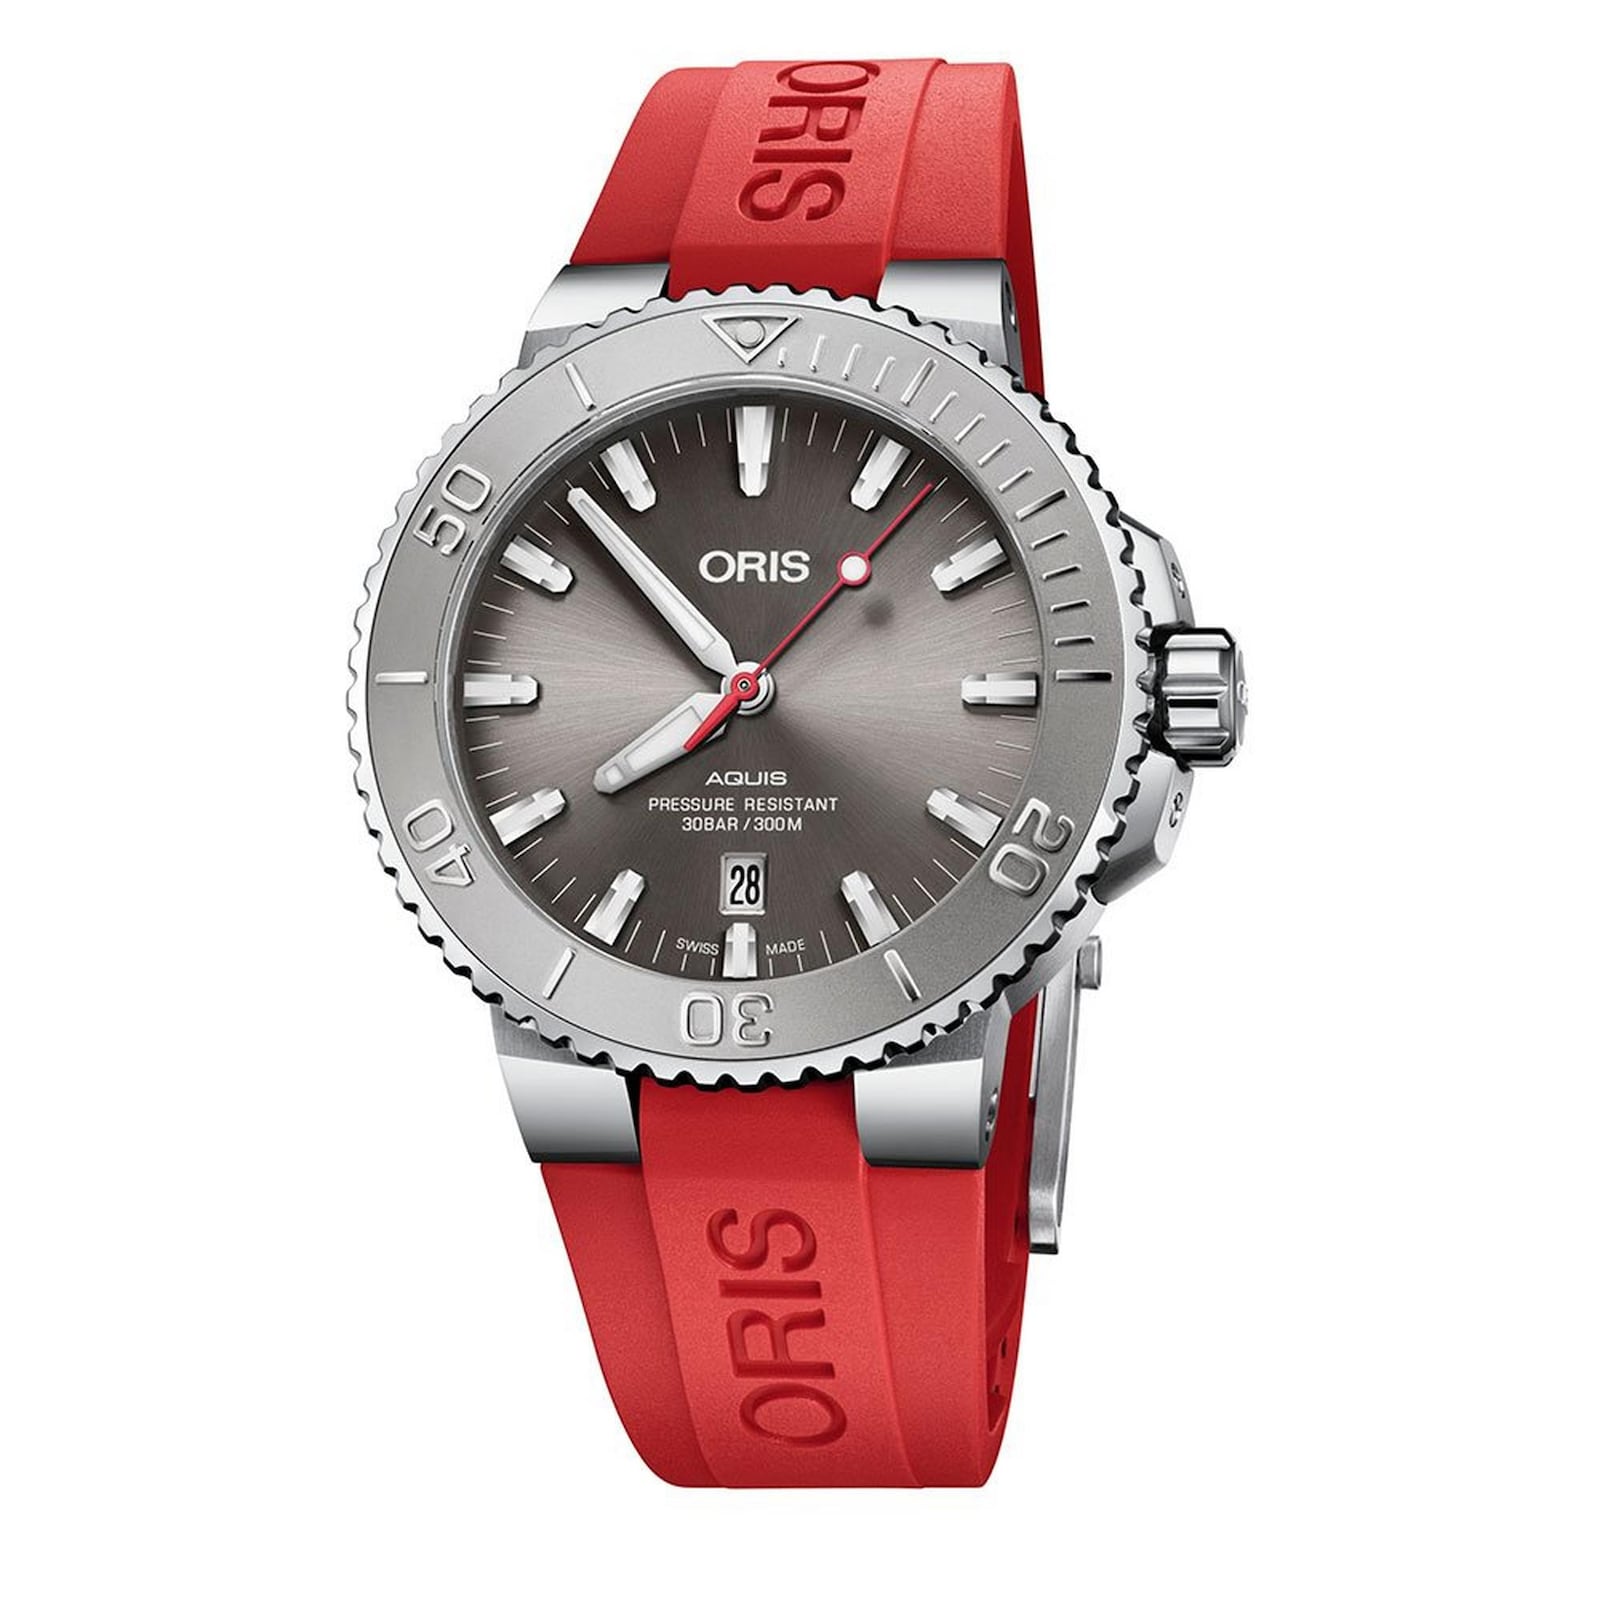 Oris Watch Price Malaysia : 73376534159RS Oris Aquis Divers Date 43mm